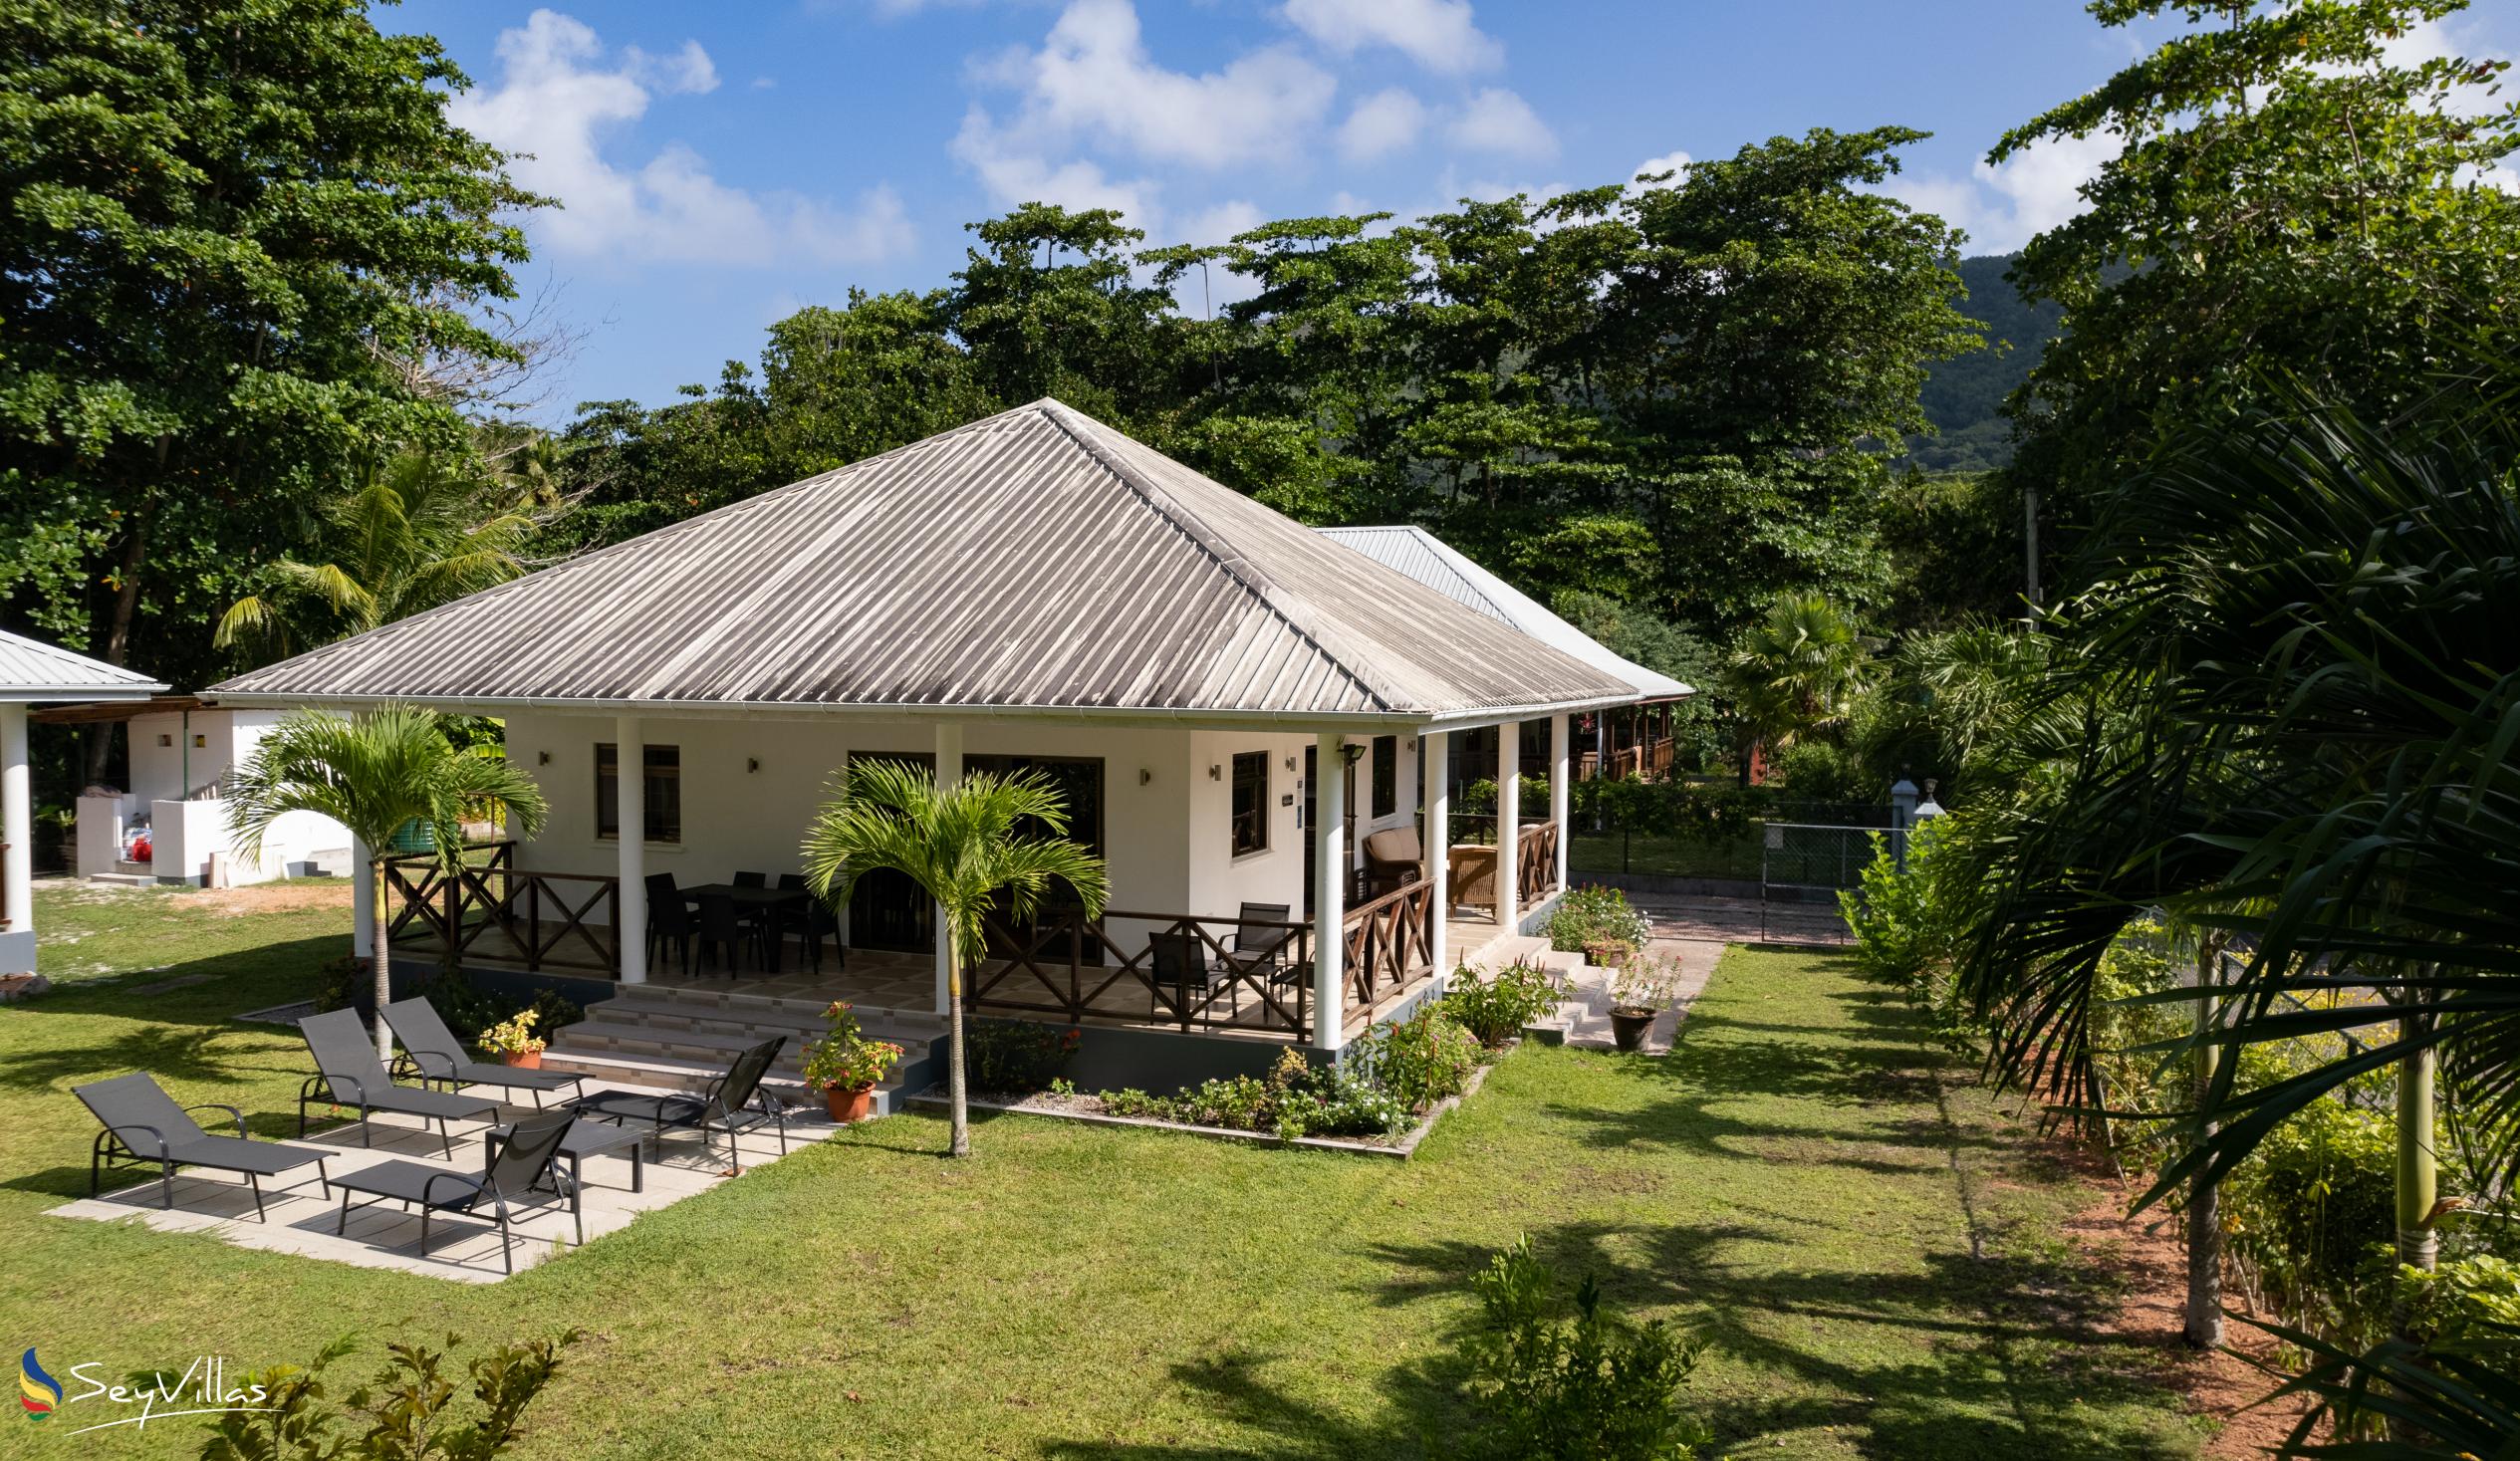 Foto 13: Villa Laure - Villa Laure - Praslin (Seychellen)